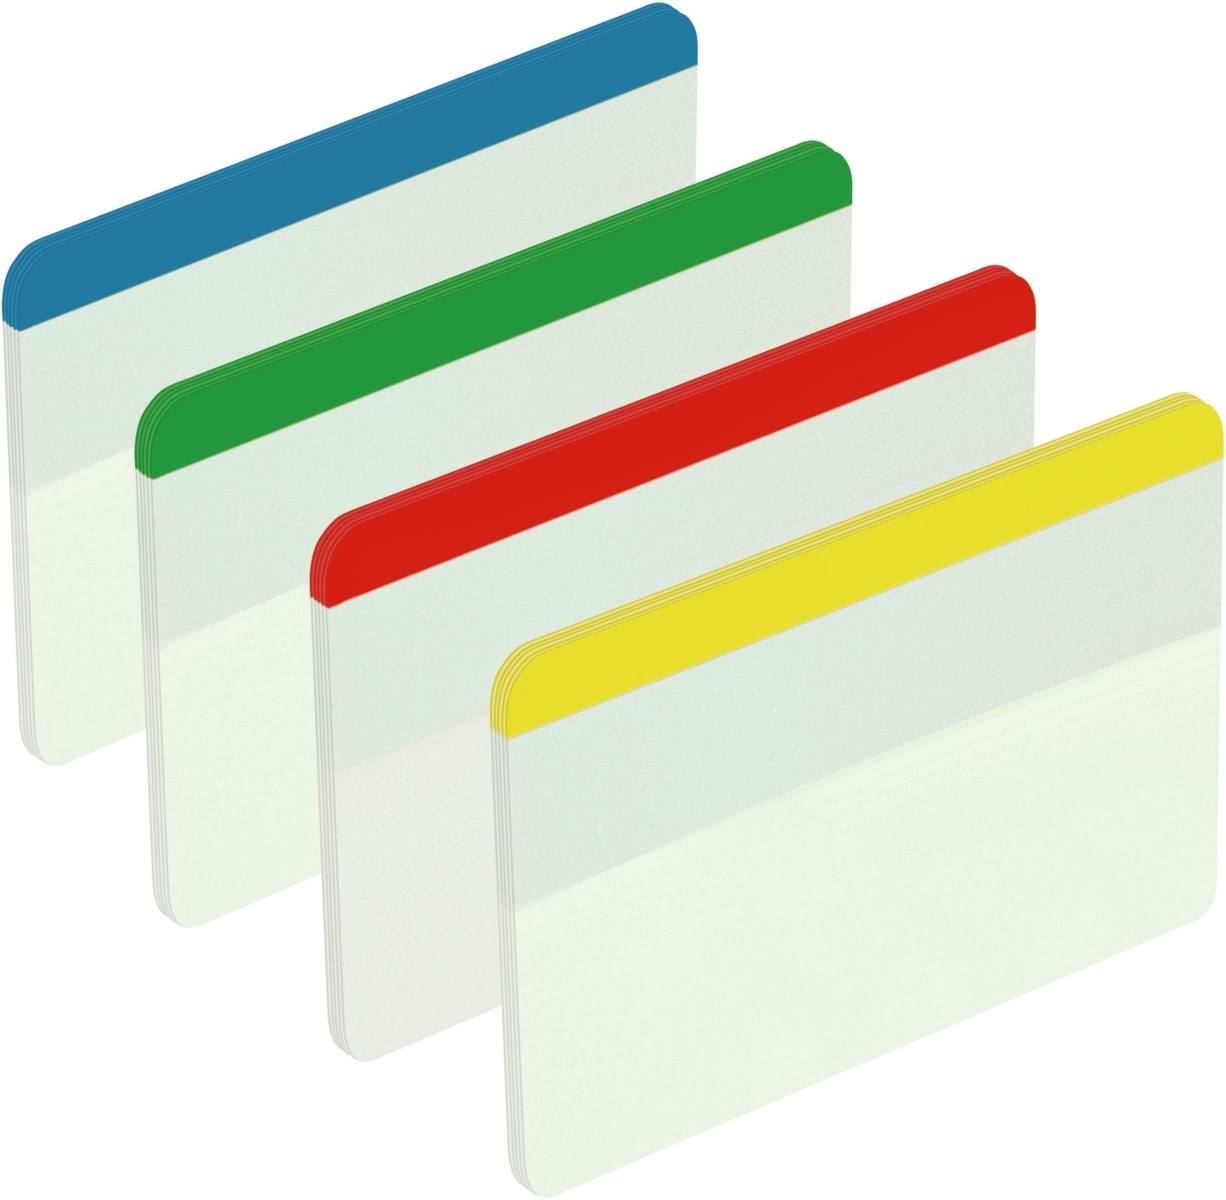 3M Post-it Index Strong 686-F1EU, 50,8 mm x 38 mm, blau, gelb, grün, rot, 4 x 6 Haftstreifen